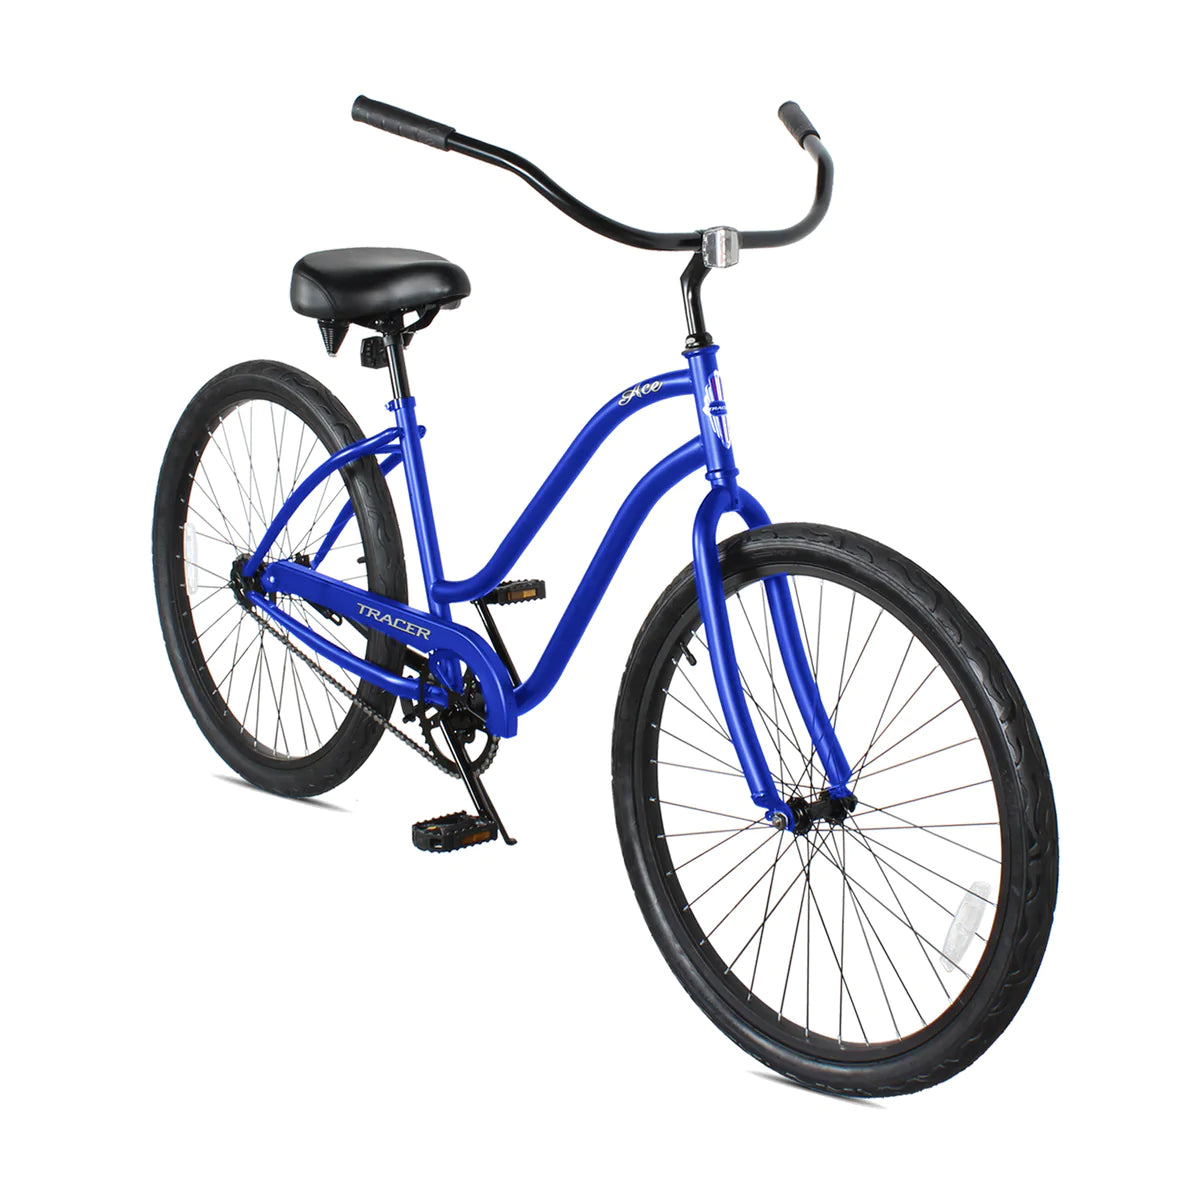 Tracer ACE-F 26" Beach Cruiser Bikes Single Speed - Blue | Beach Cruiser Bikes | Cruiser Bikes | Beach Bikes | Single Speed | Adult Bike | Bike Lover USA 